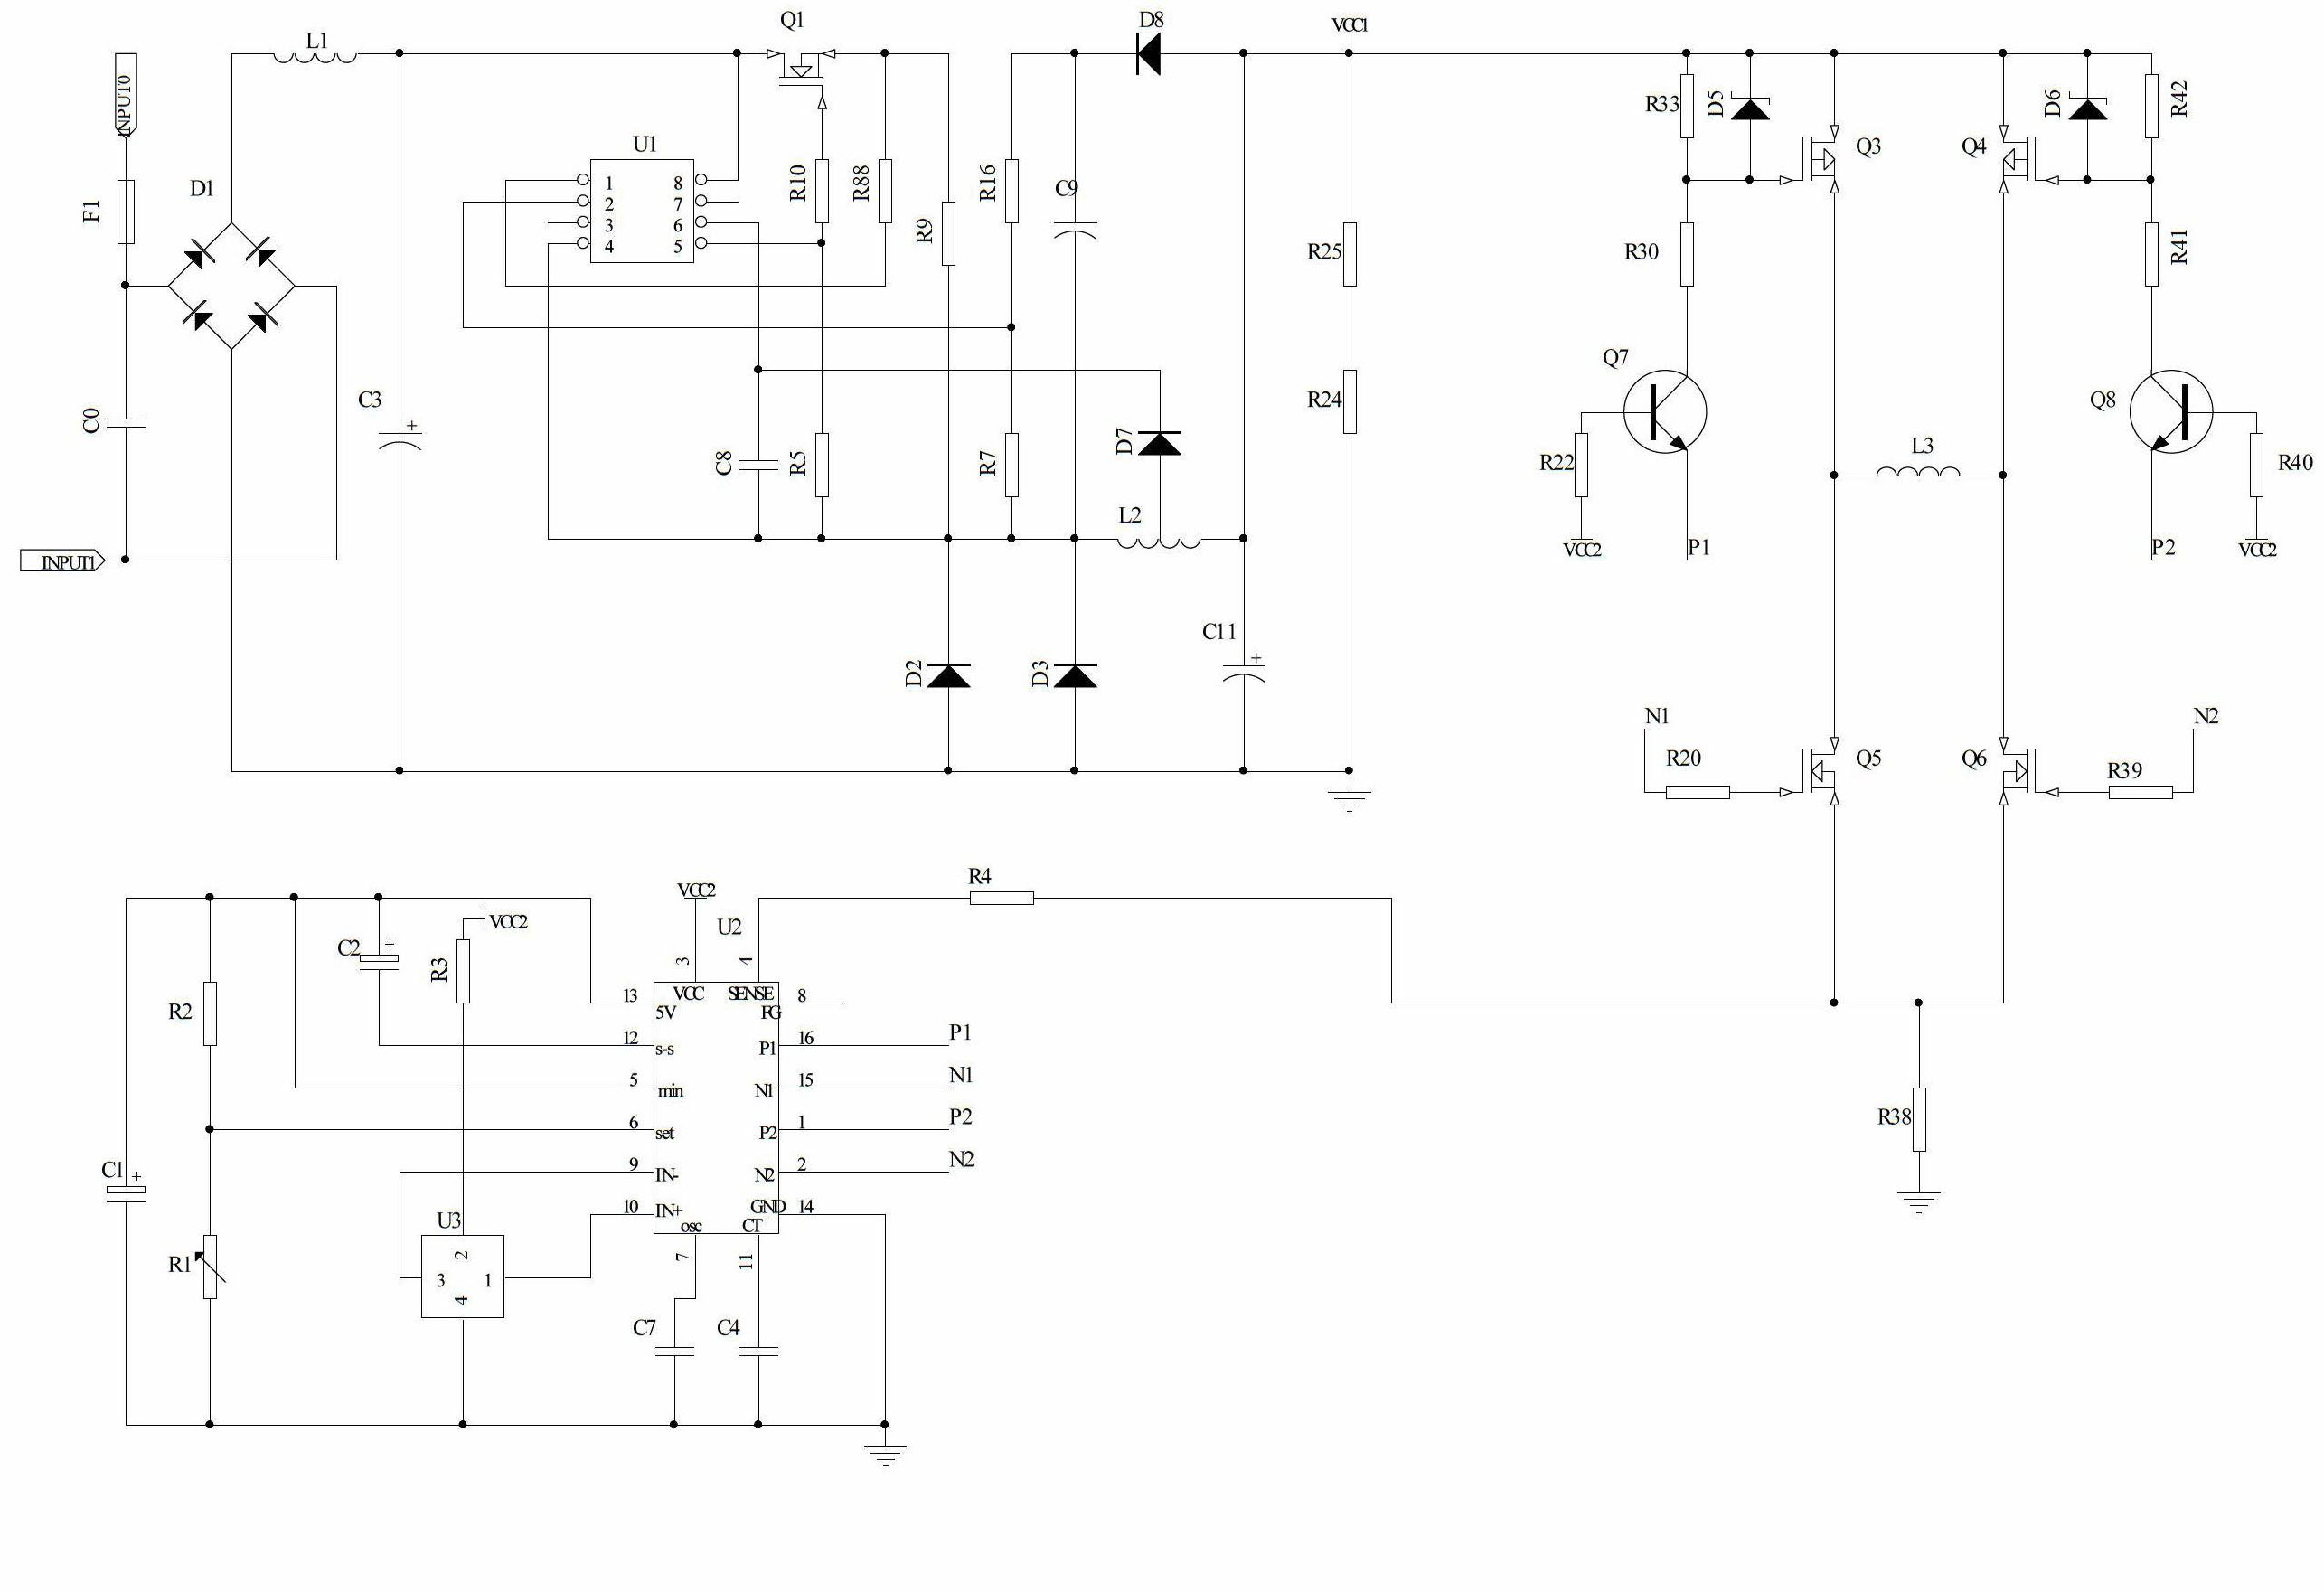 Alternating current fan control circuit